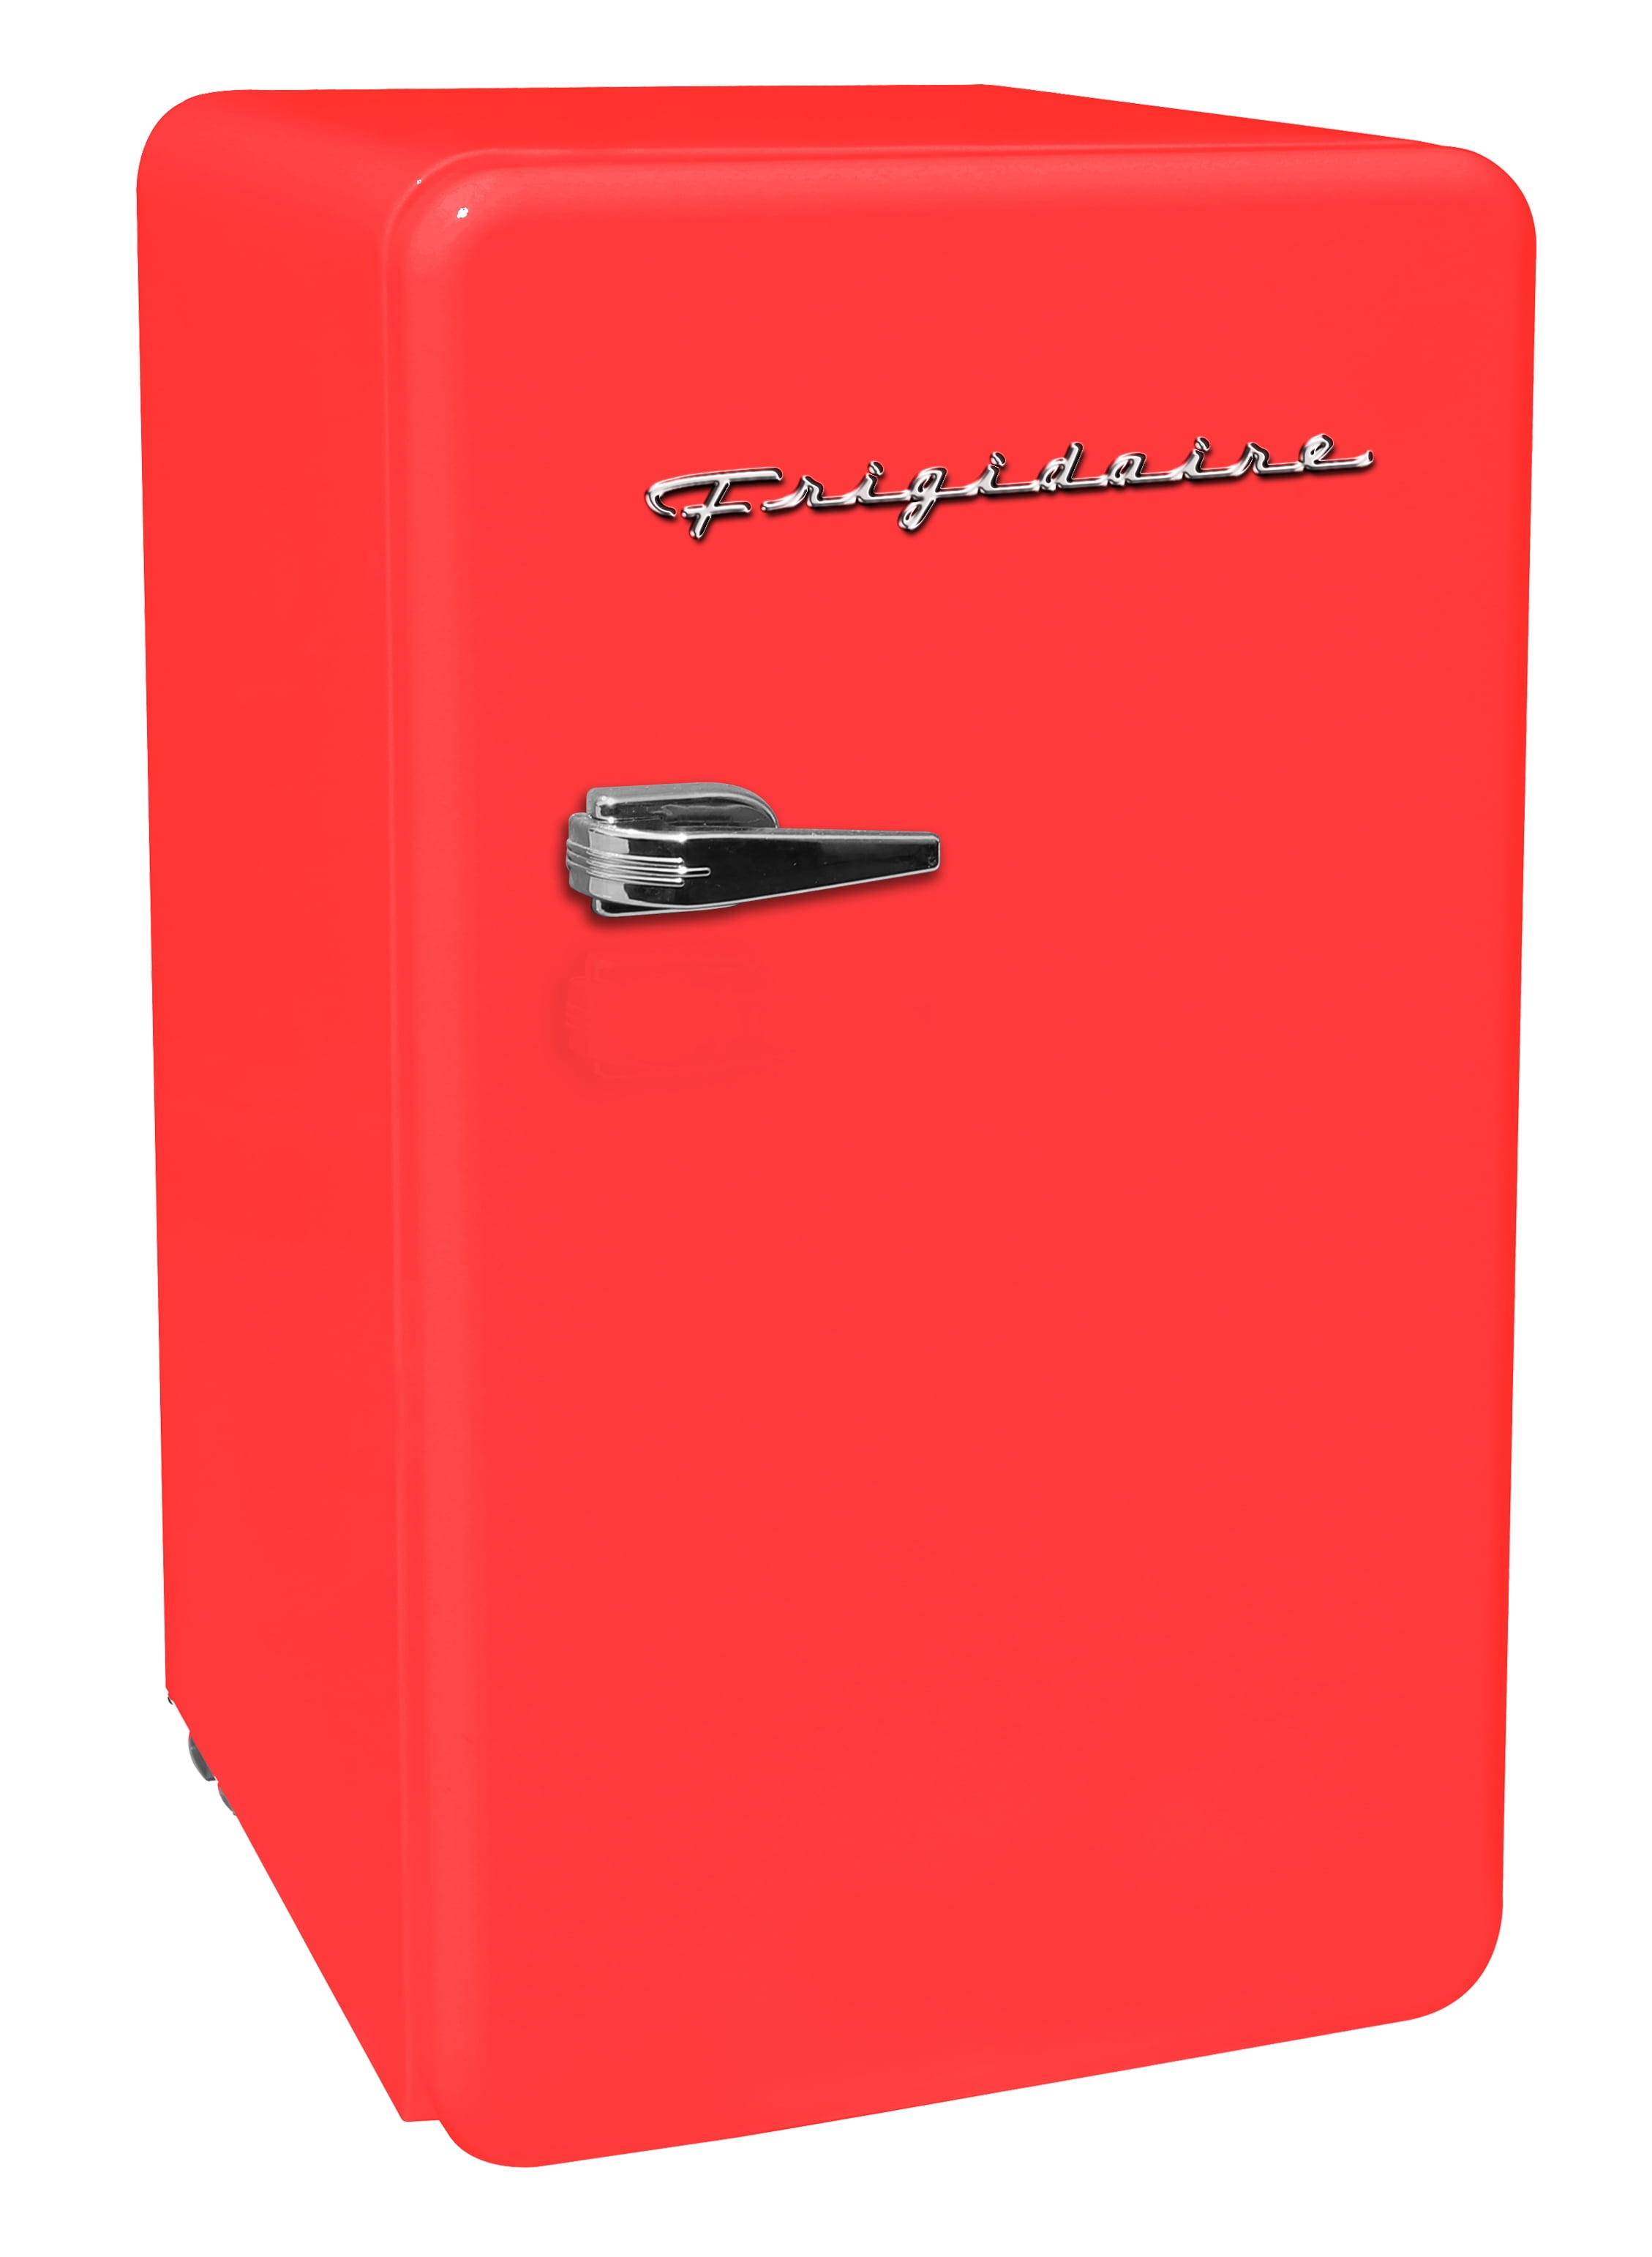 Frigidaire 3.2 Cu. ft. Single Door Retro Compact Refrigerator EFR372, Red 